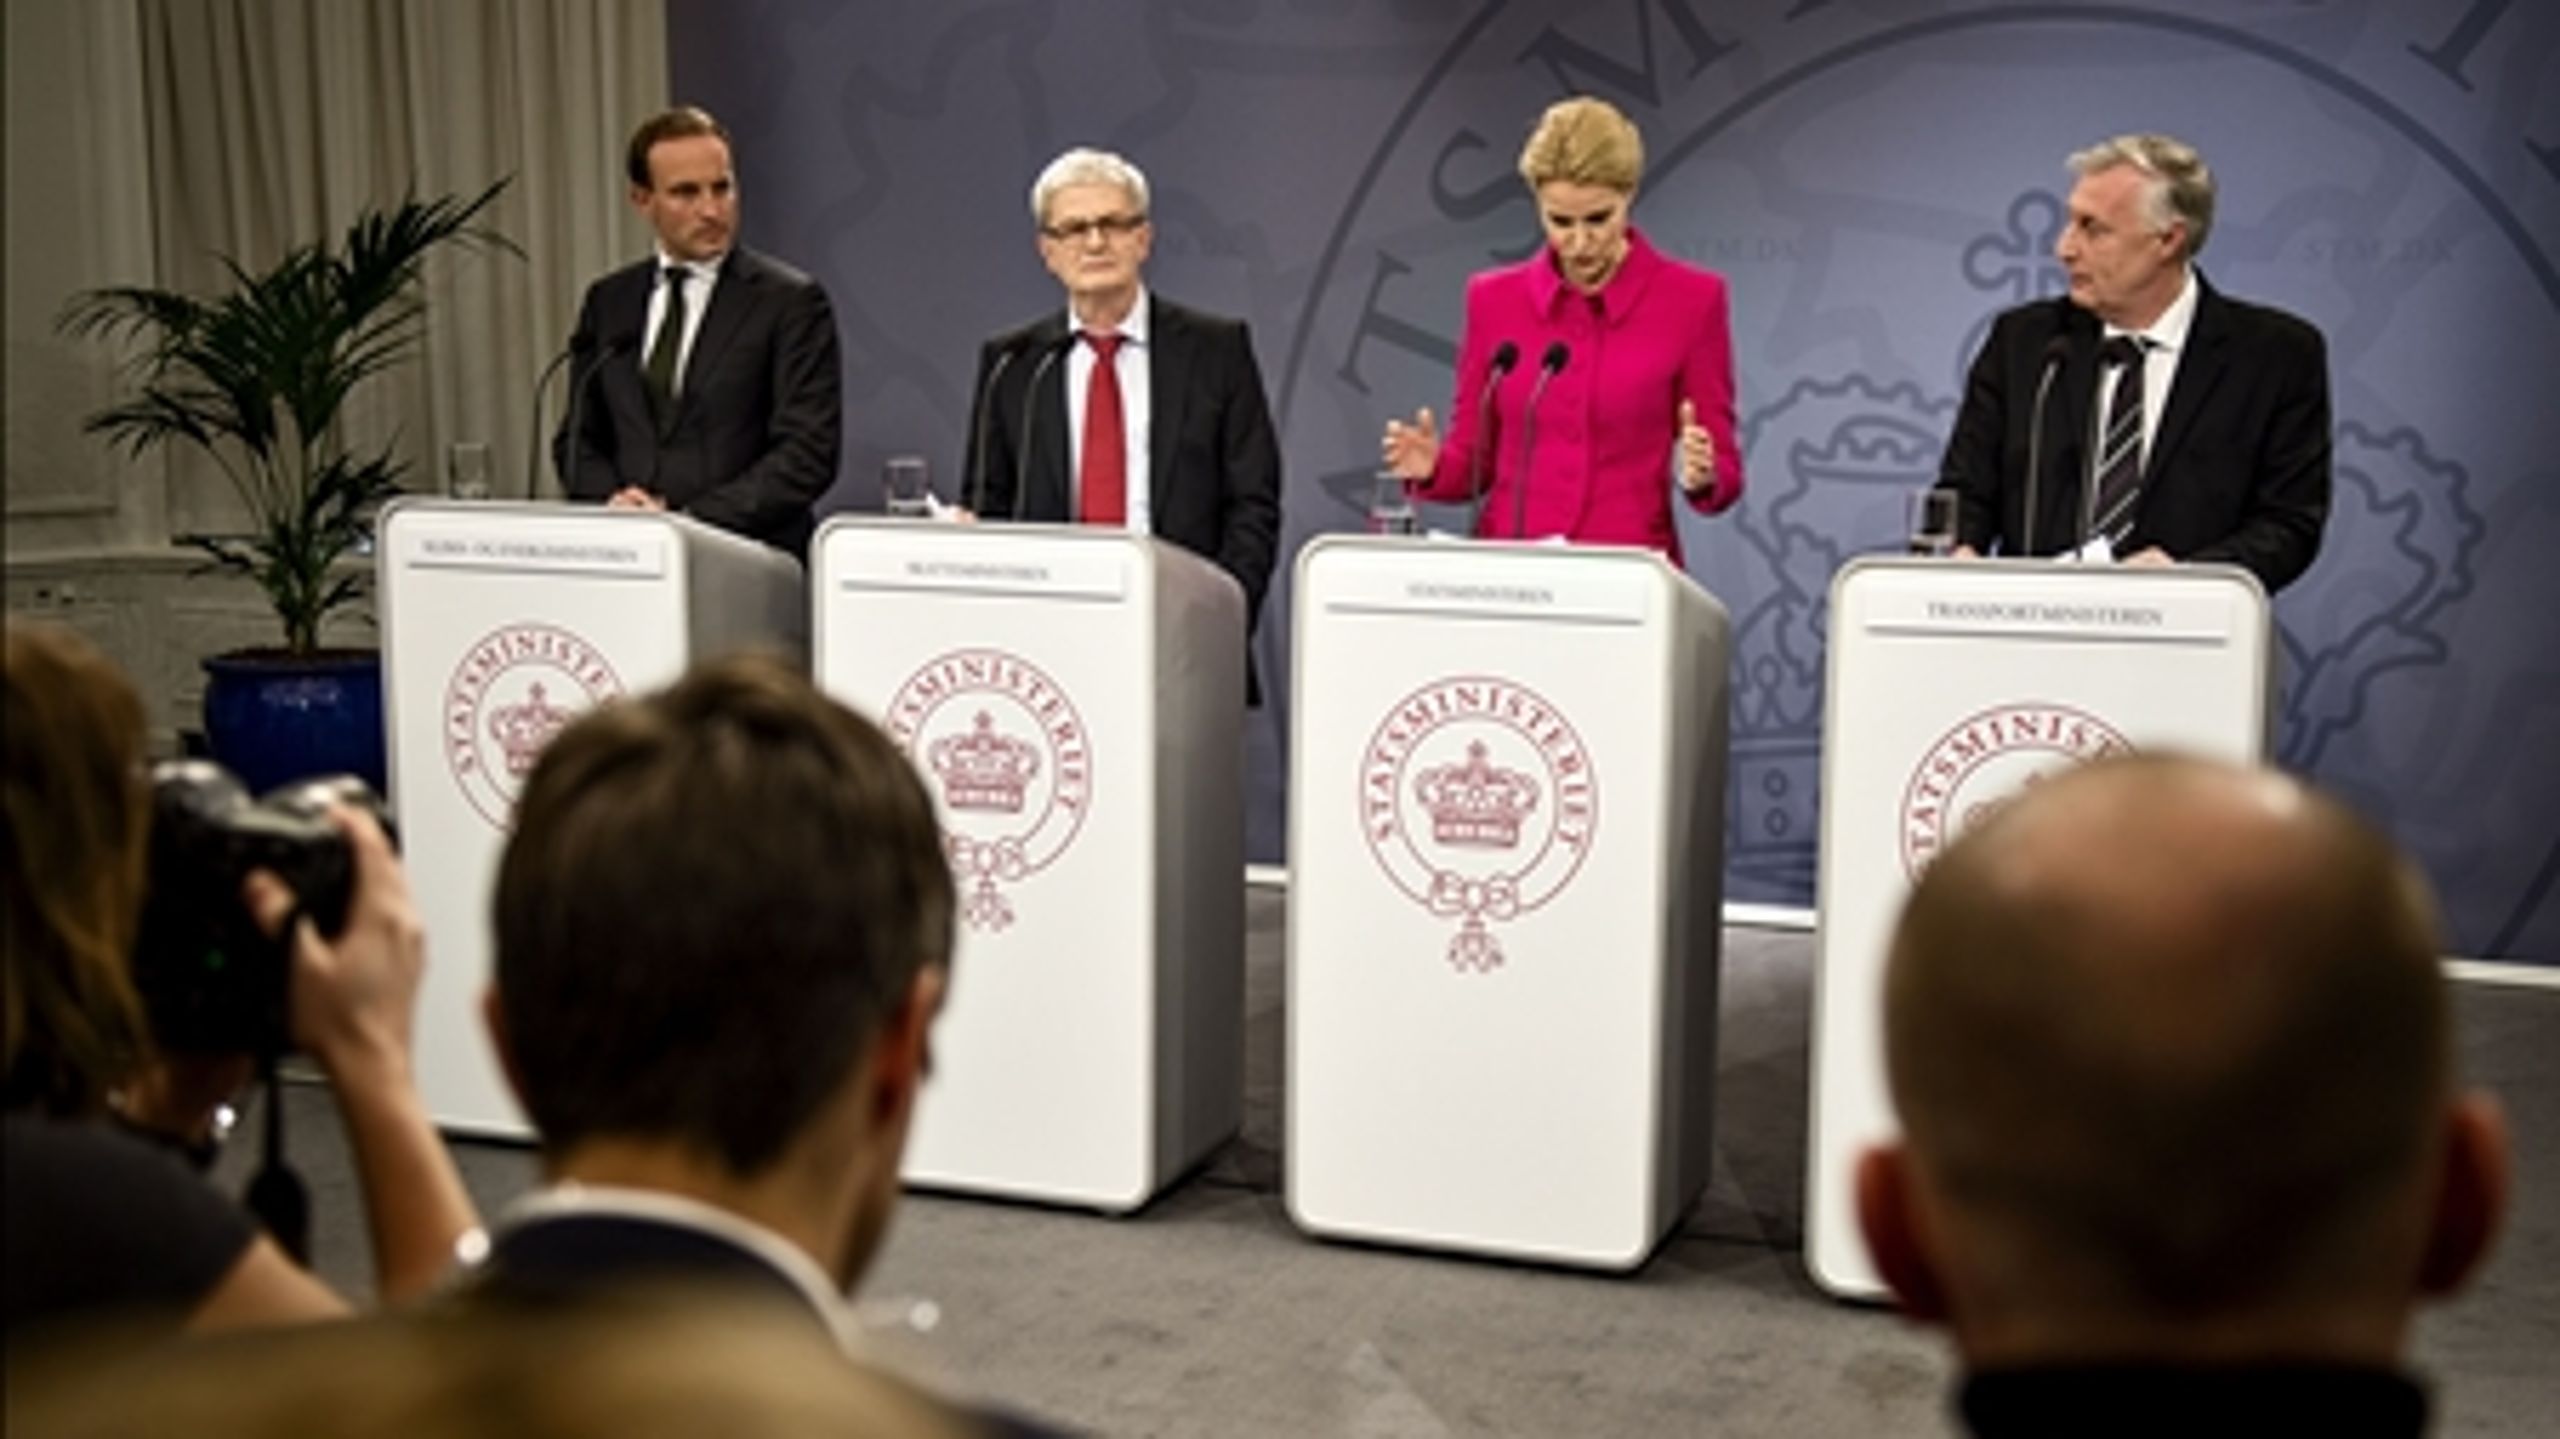 Penge fra Nordsøolien skal investeres i en bedre jernbane, sagde statsminister Helle Thorning-Schmidt (S) fredag. 